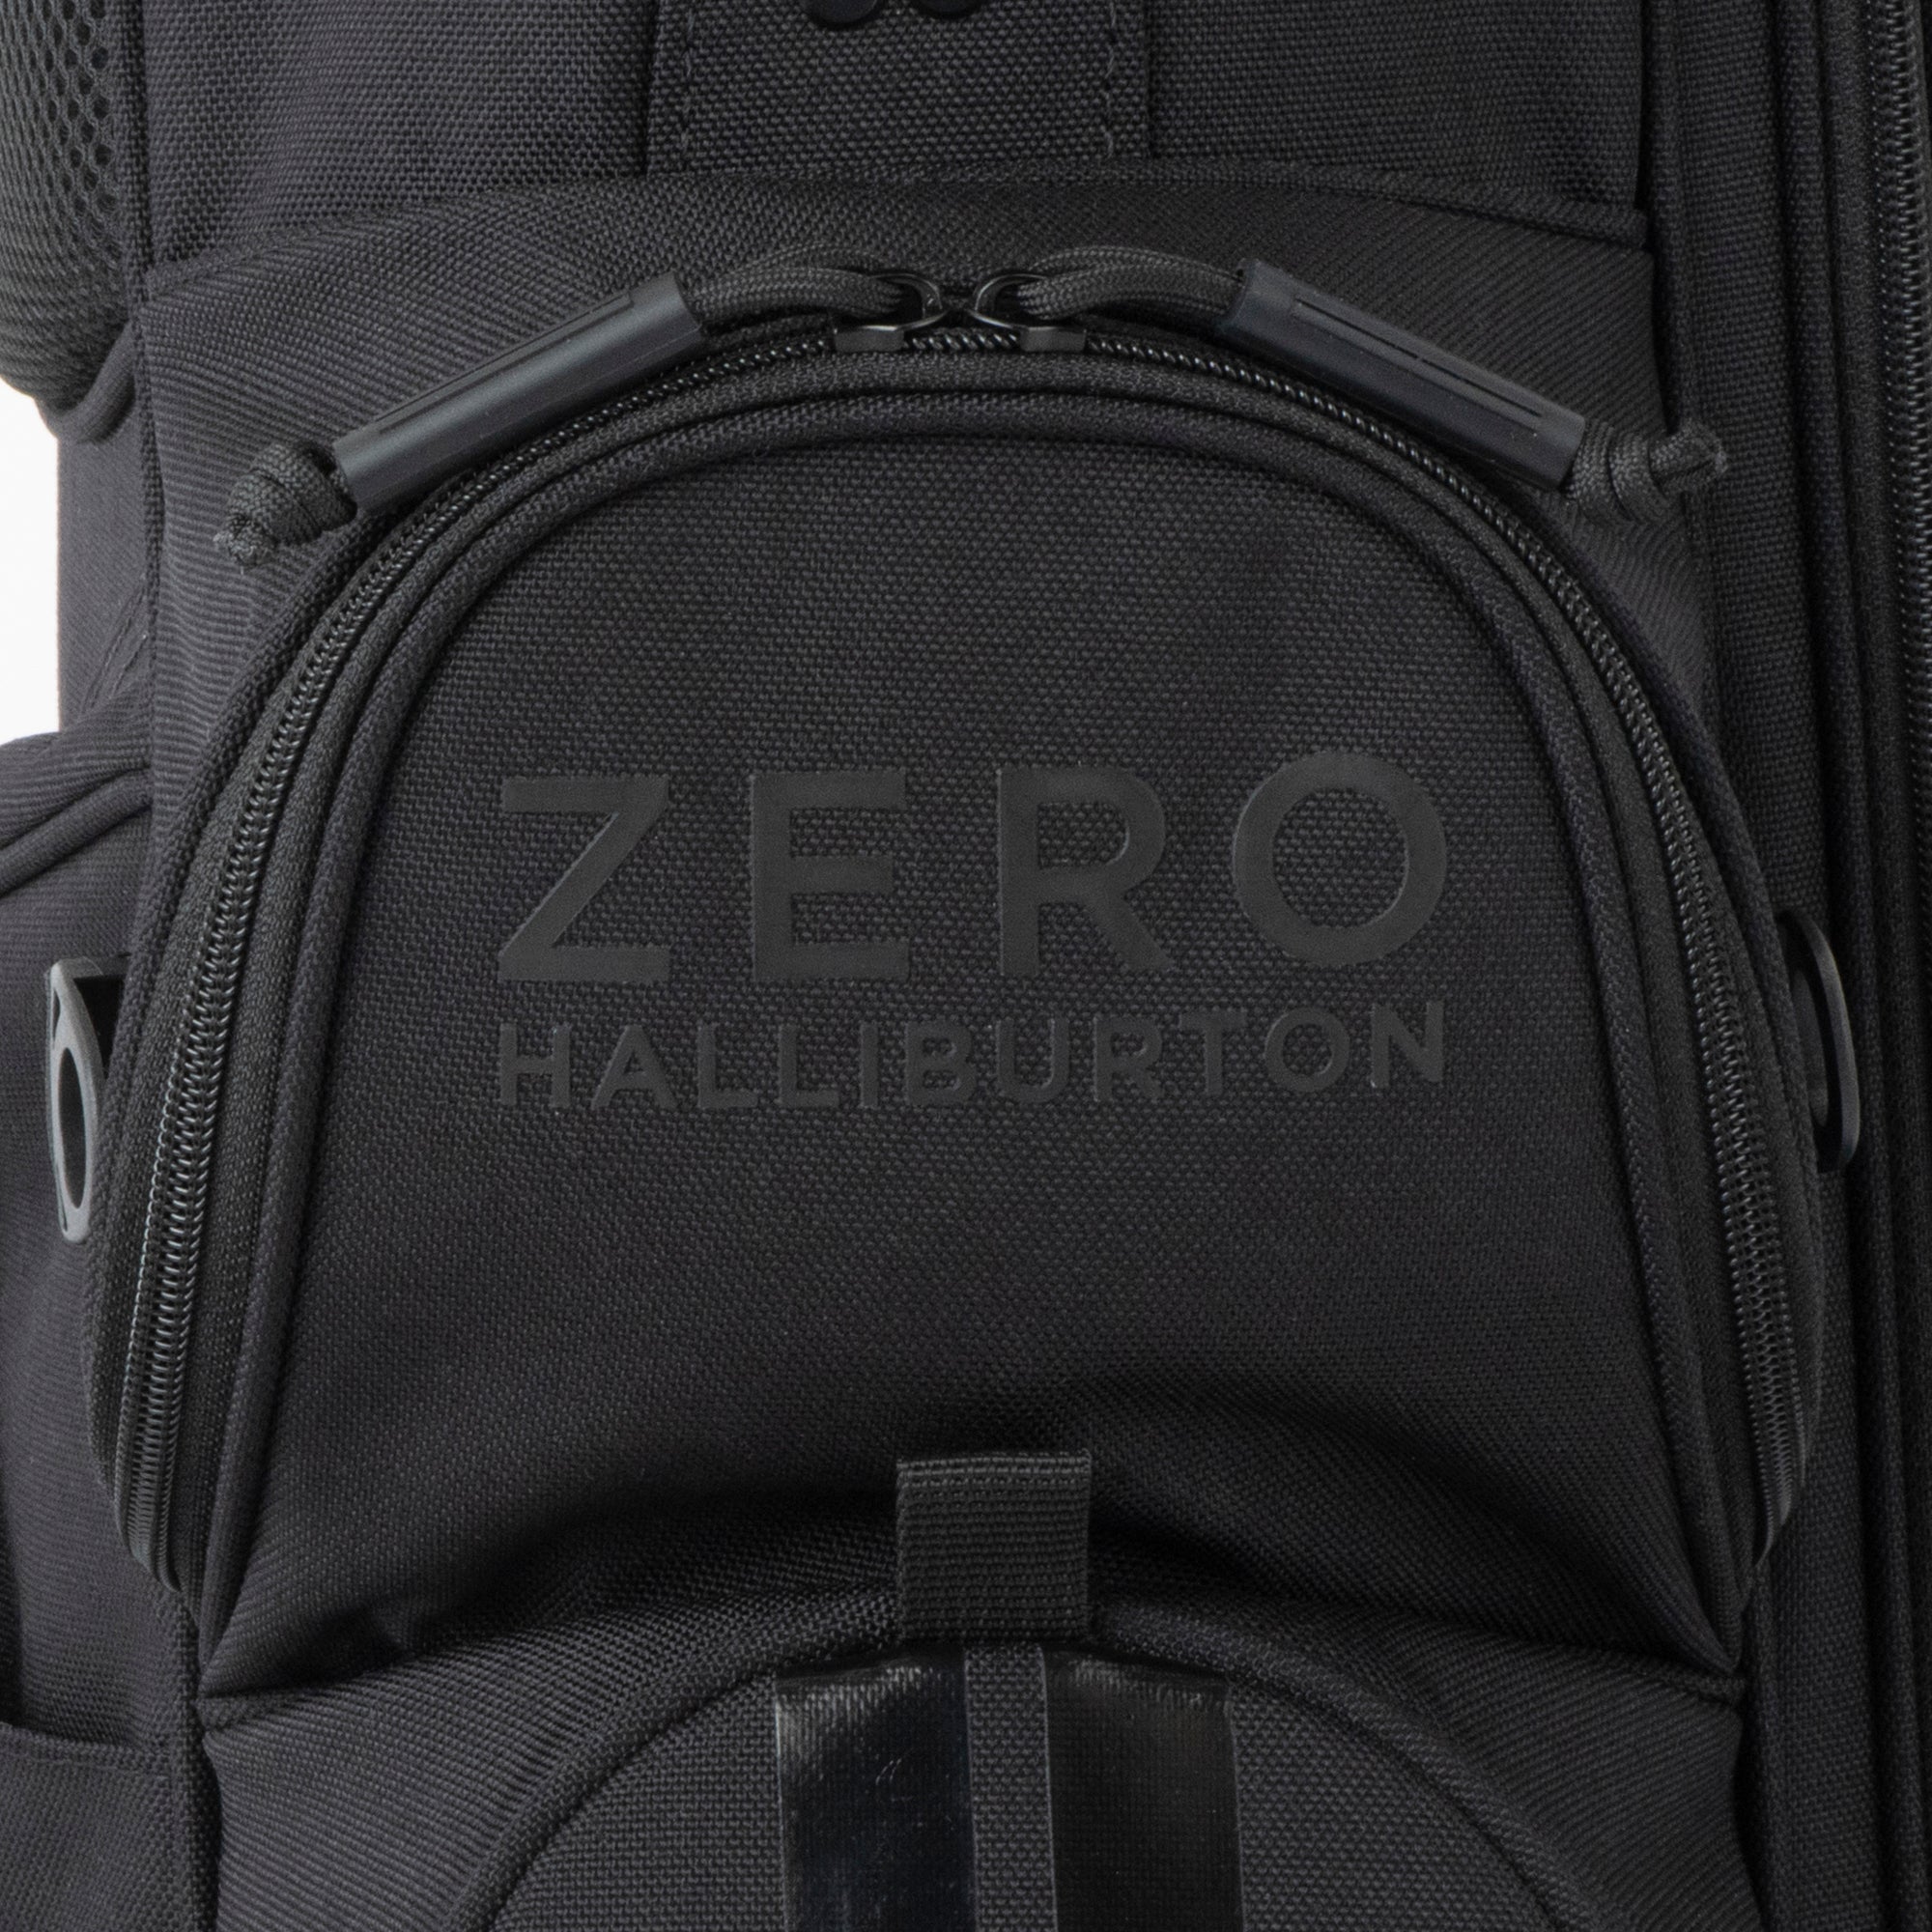 Golf Bags  ZH Cart Bag – Zero Halliburton